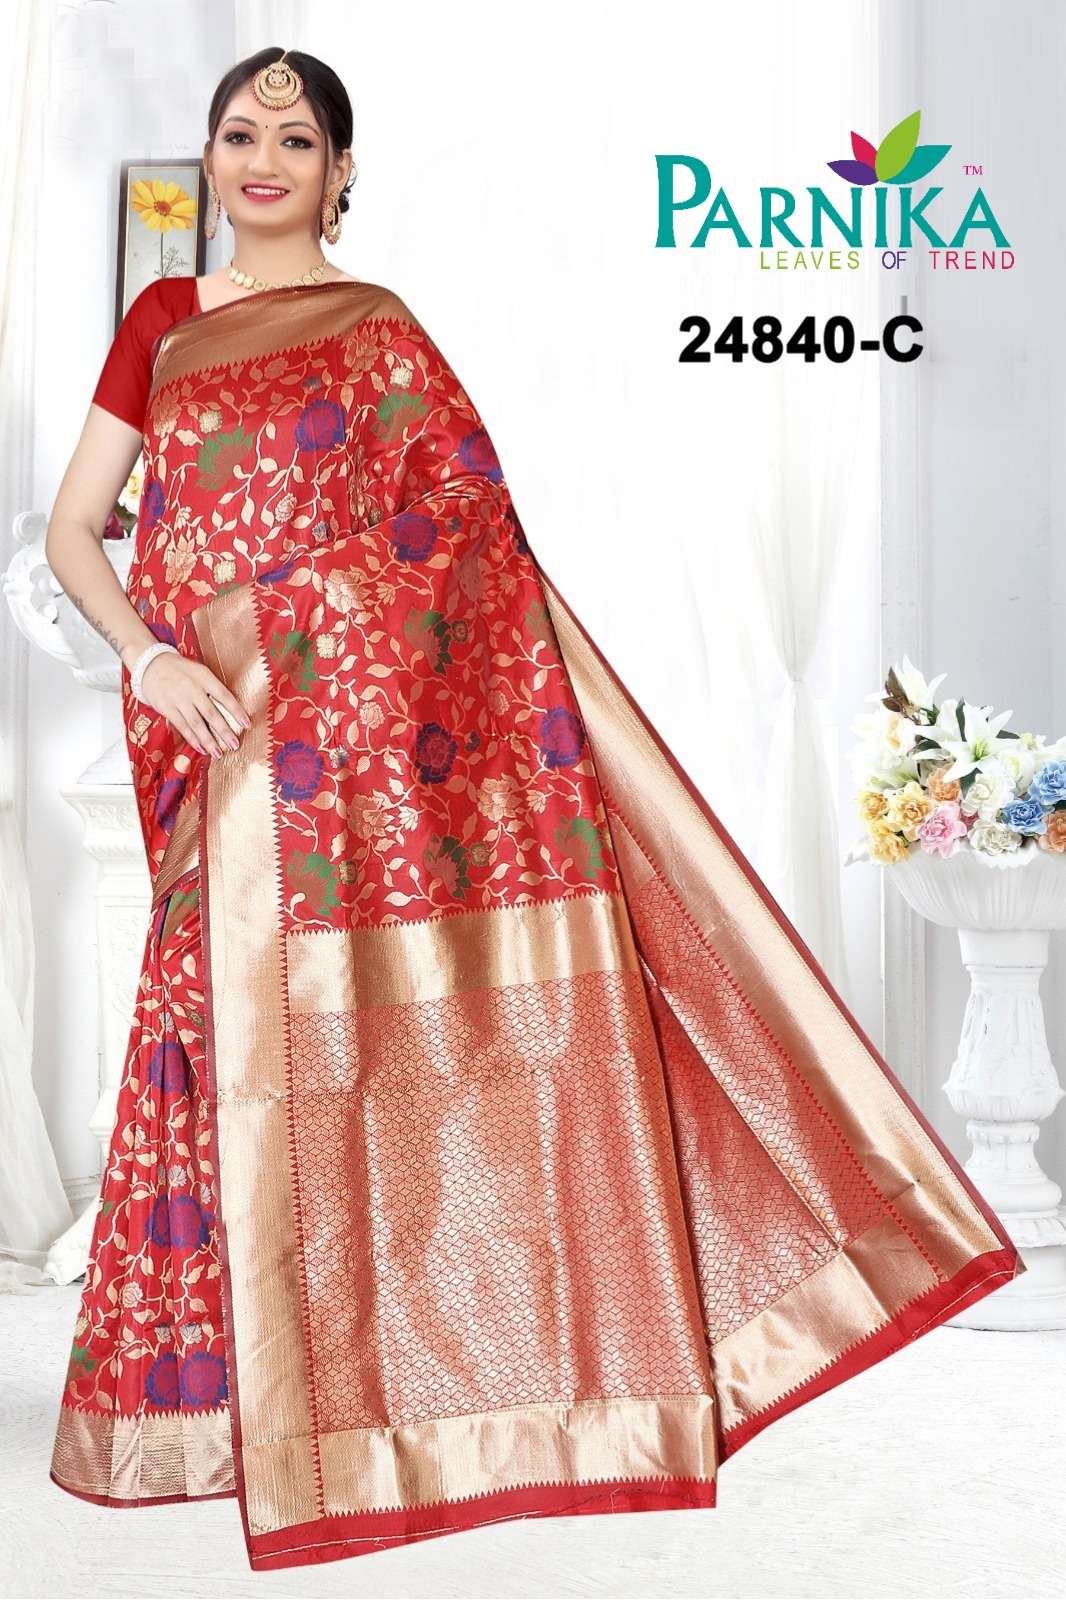 Parnika India Lichi Silk Jacquard Sarees Festive Wear Wedding Saree for Women - 24840